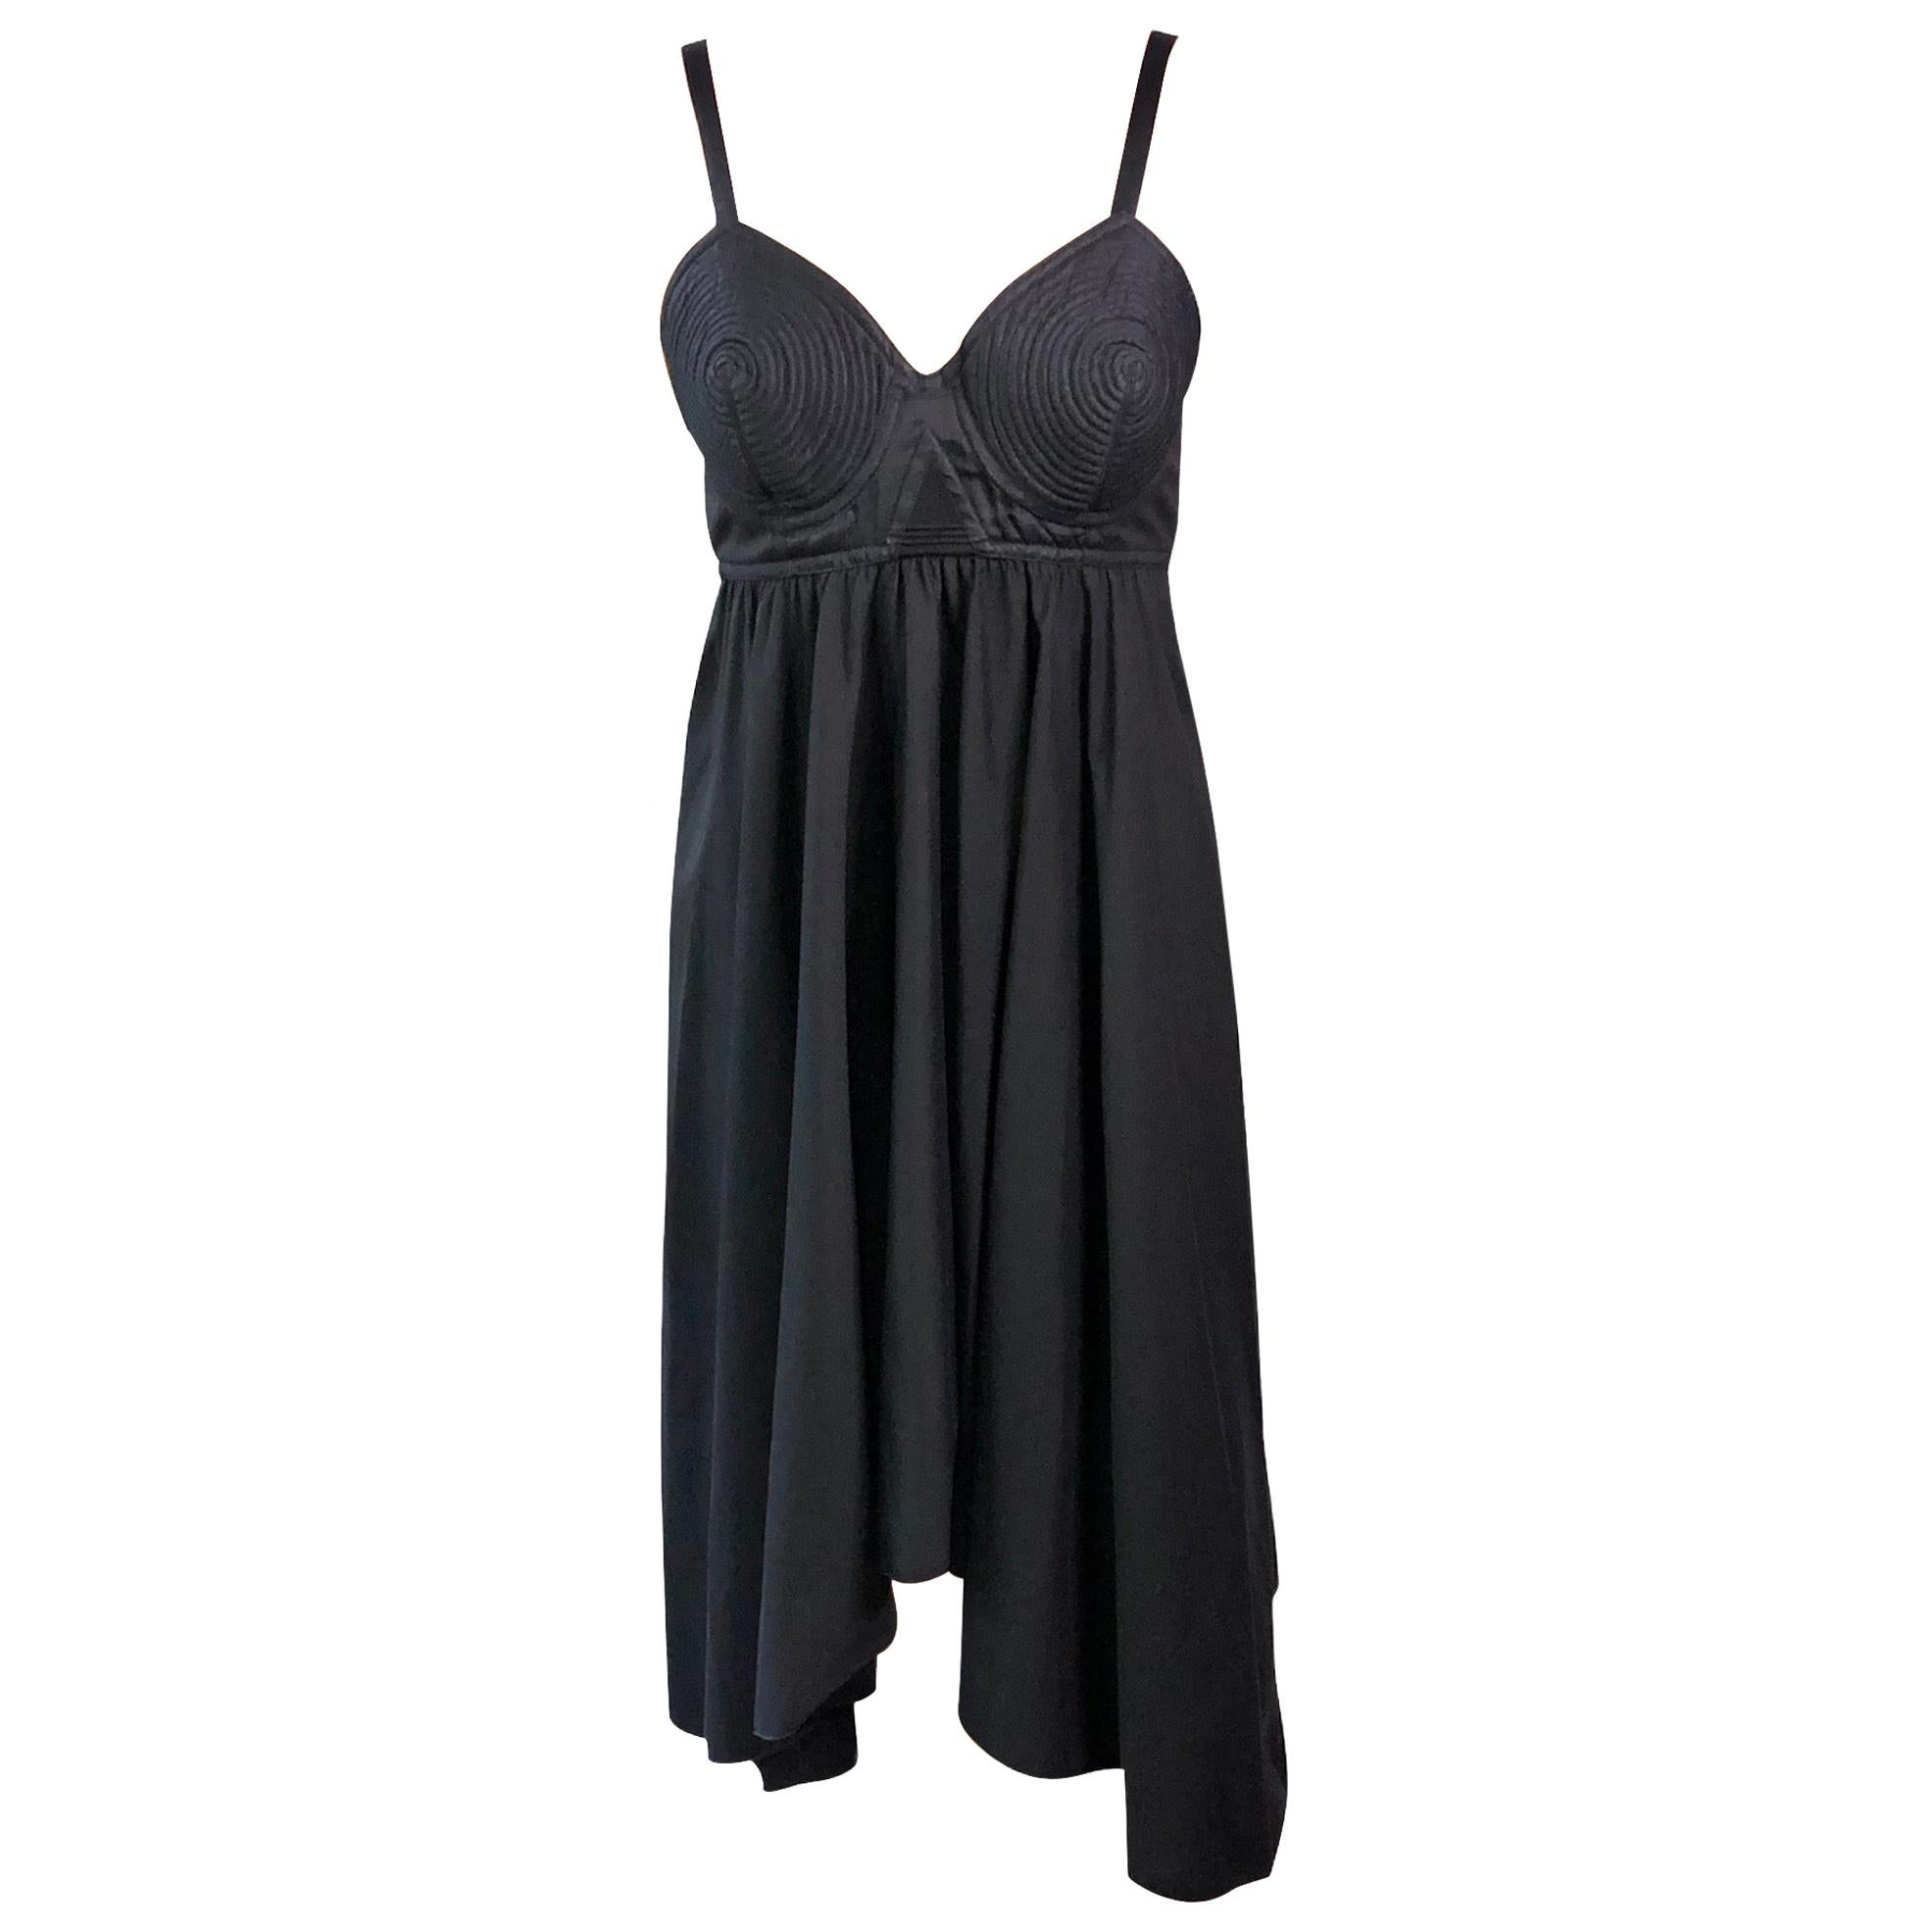 Jean Paul Gaultier Vintage Cone Bra Black Dress 